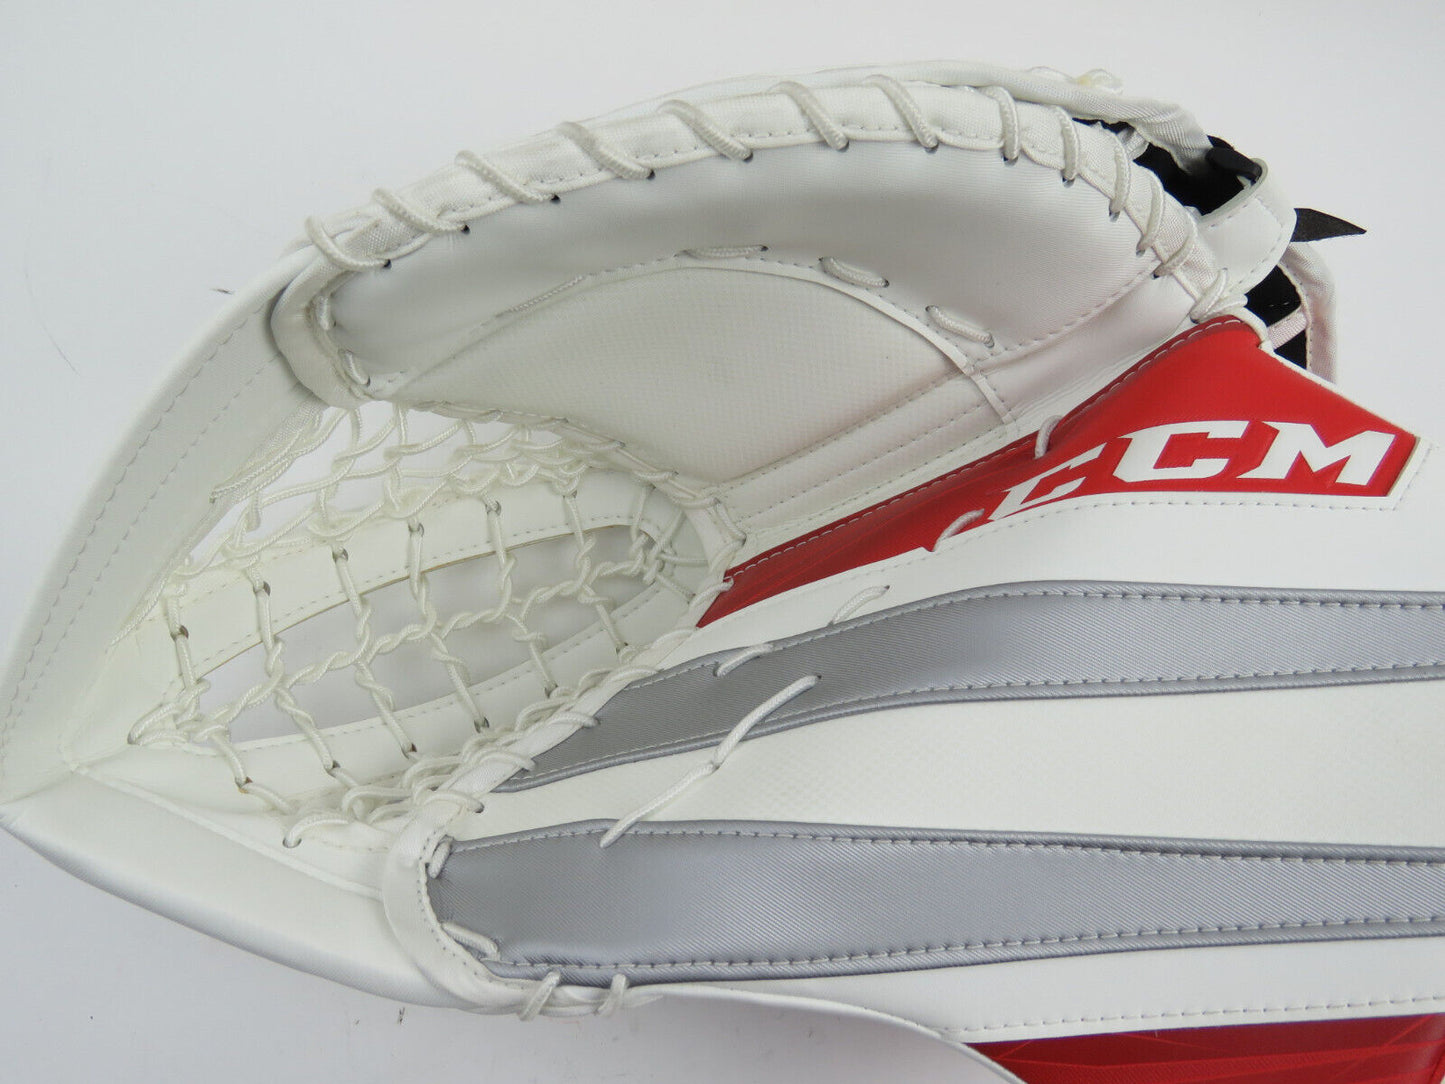 New! CCM EFLEX 5 Pro Stock Hockey Goalie Glove Catcher Senior White Red Silver